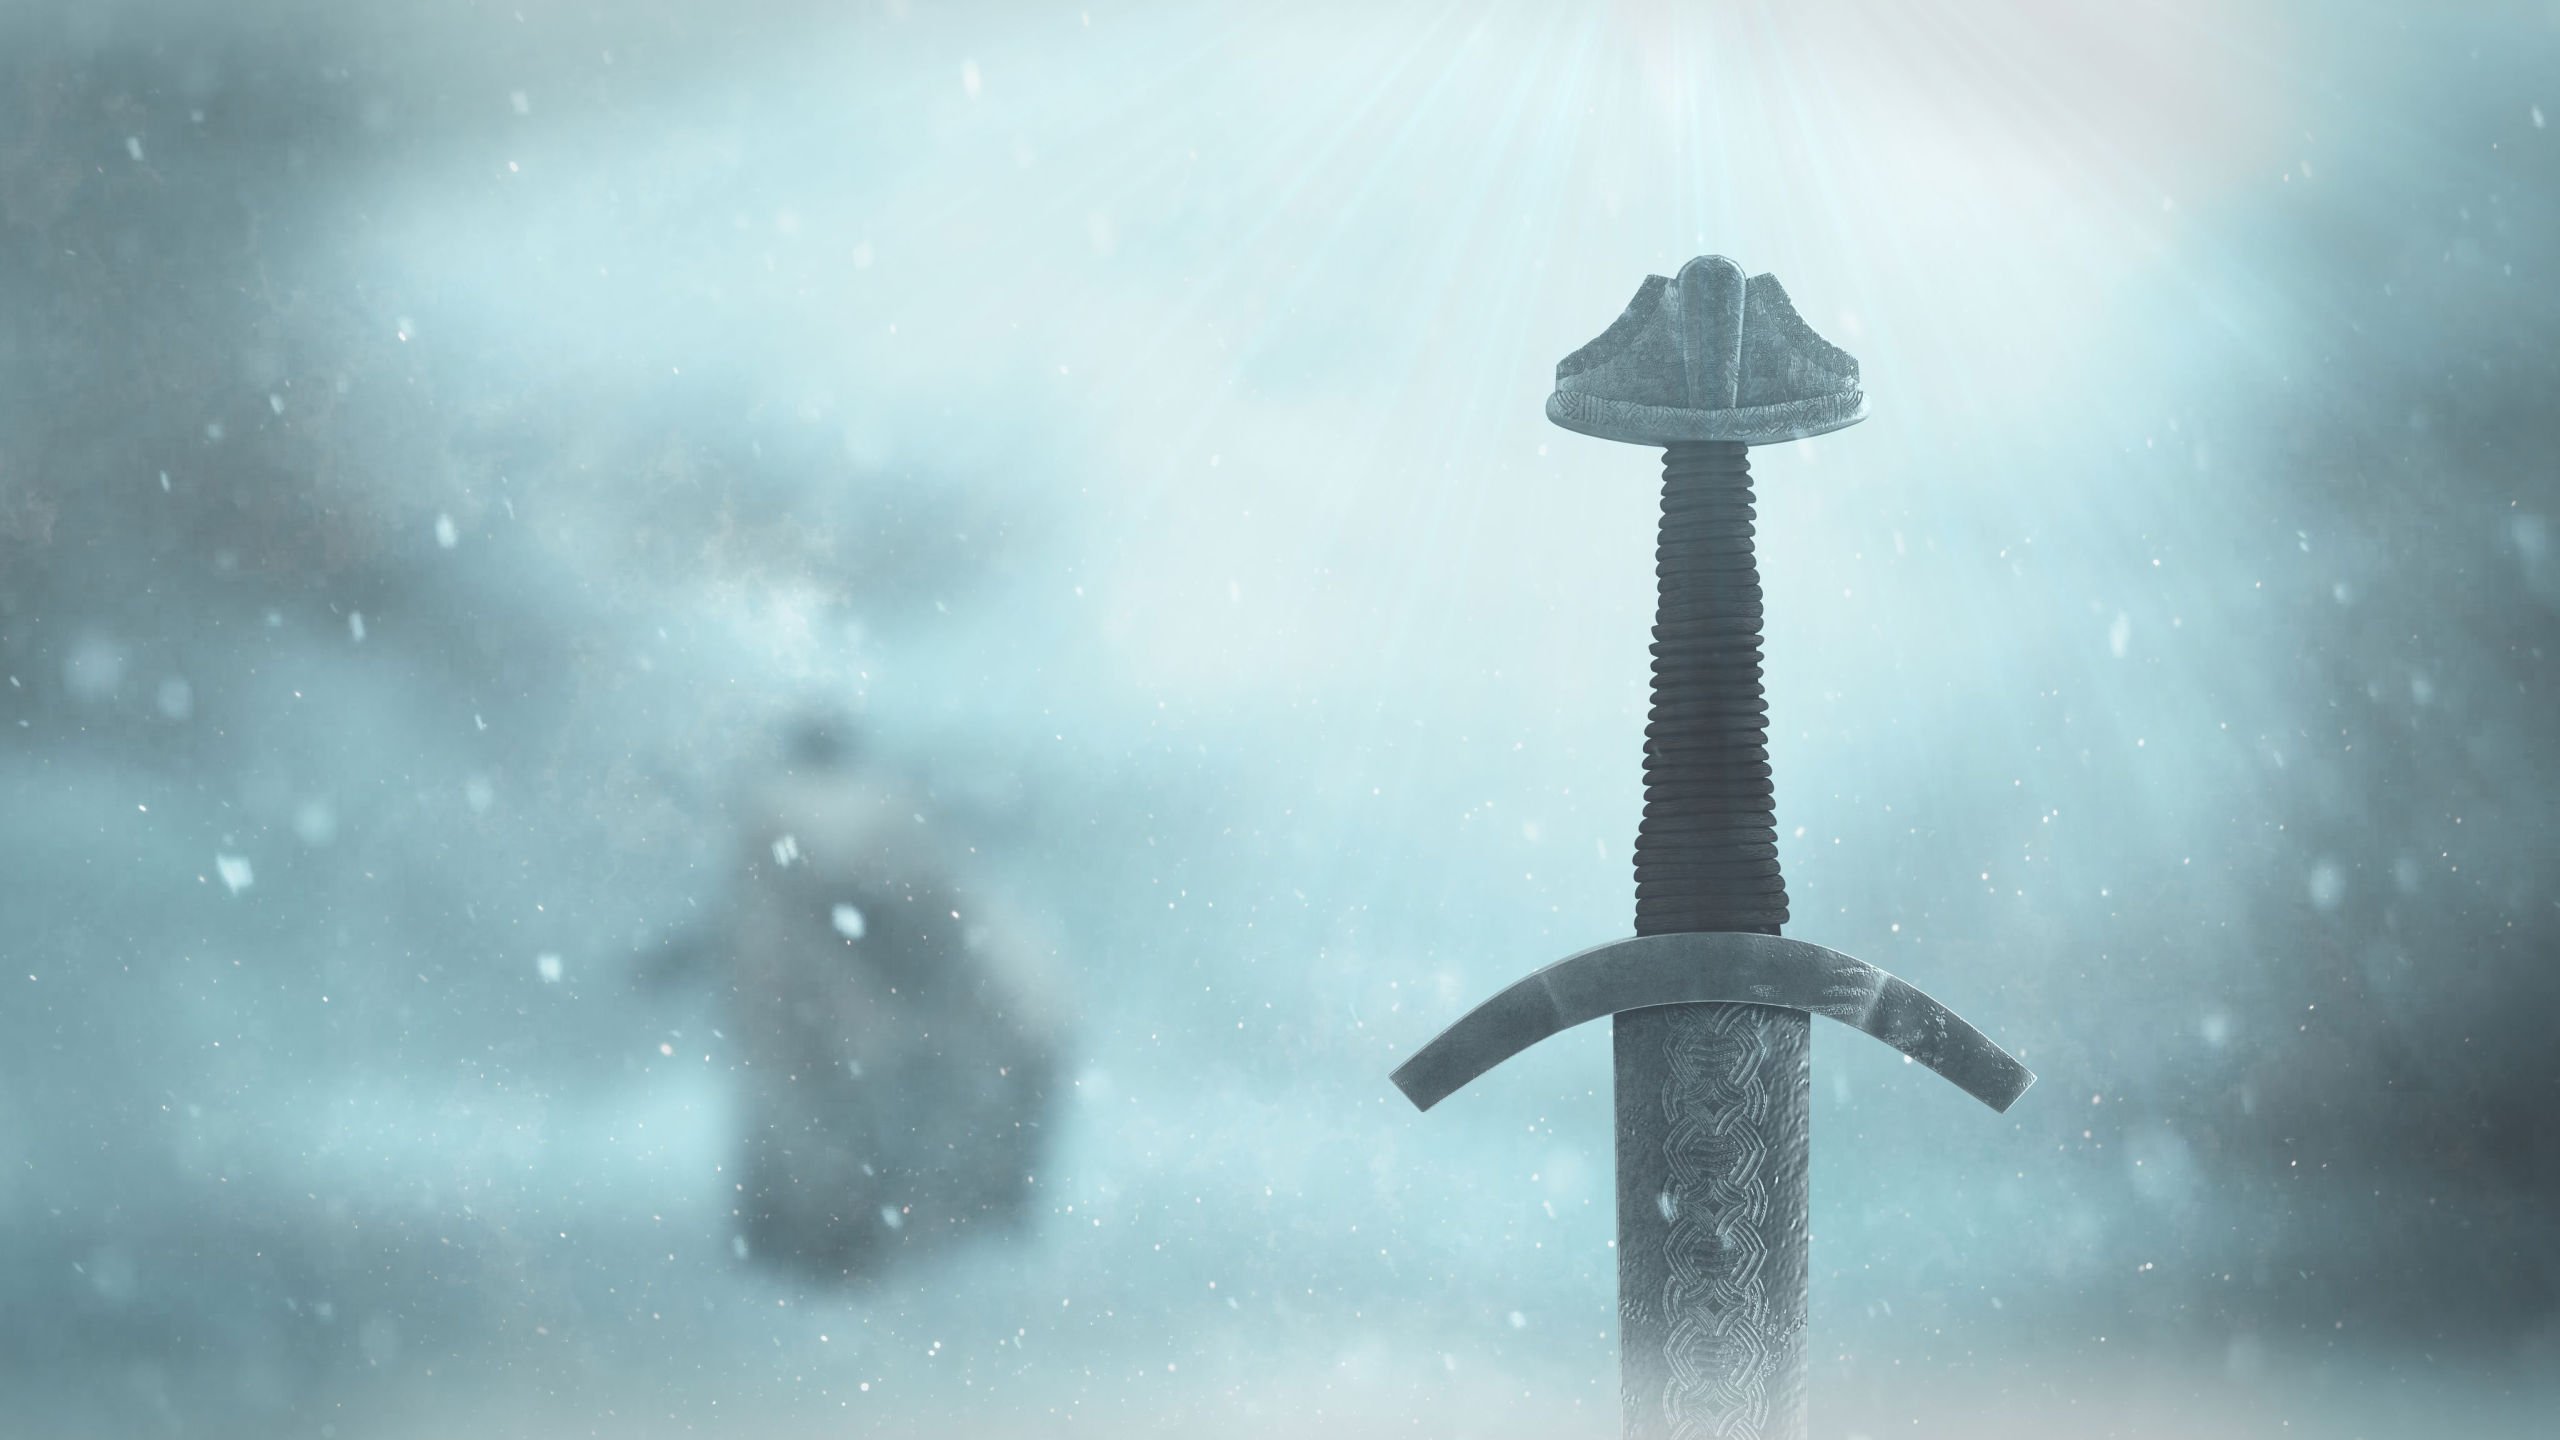 Viking language of the sword.